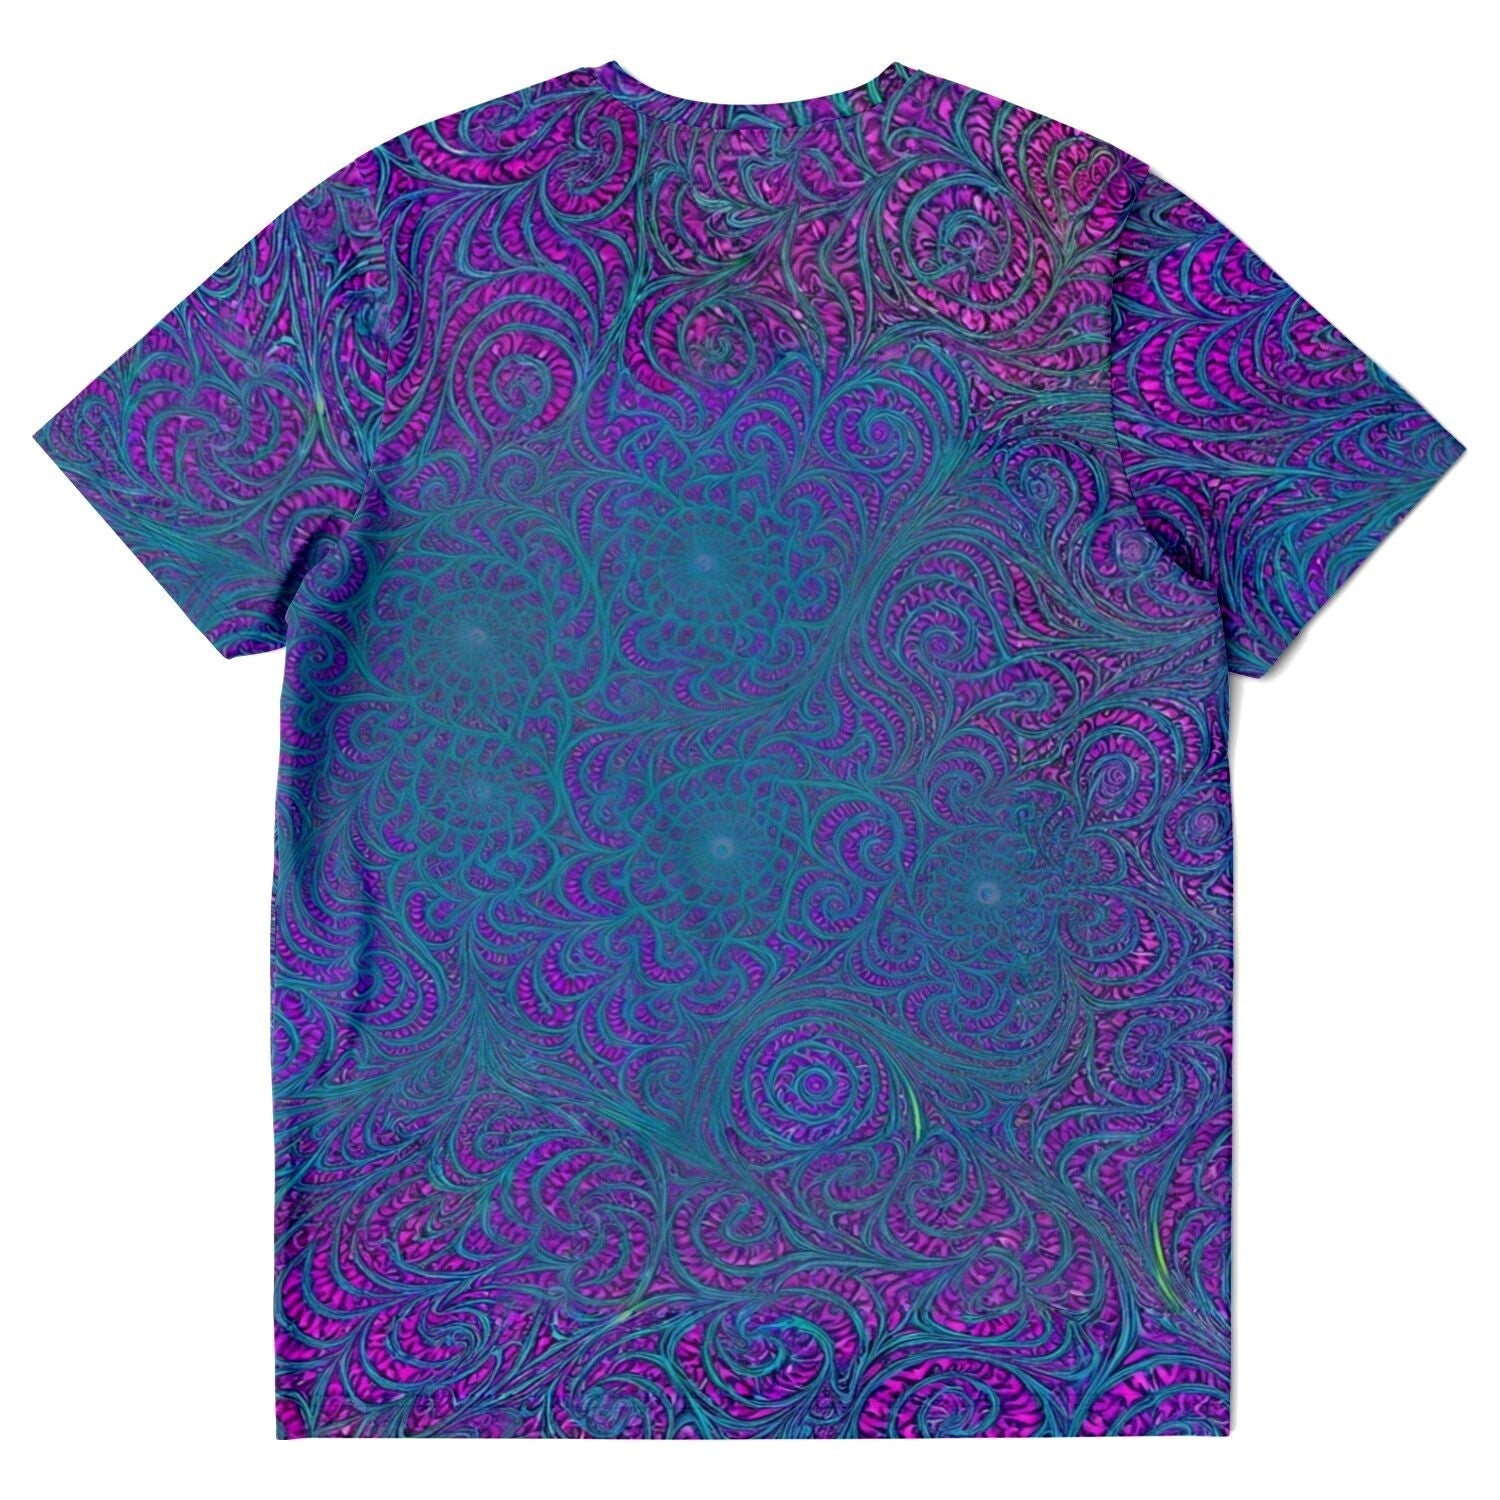 T-shirt Vibrational Alignment: Sacred Geometry Fractal Trippy Tee | Cosmic Empowerment | Flower of Life Abstract Mandala Graphic Art T-Shirt